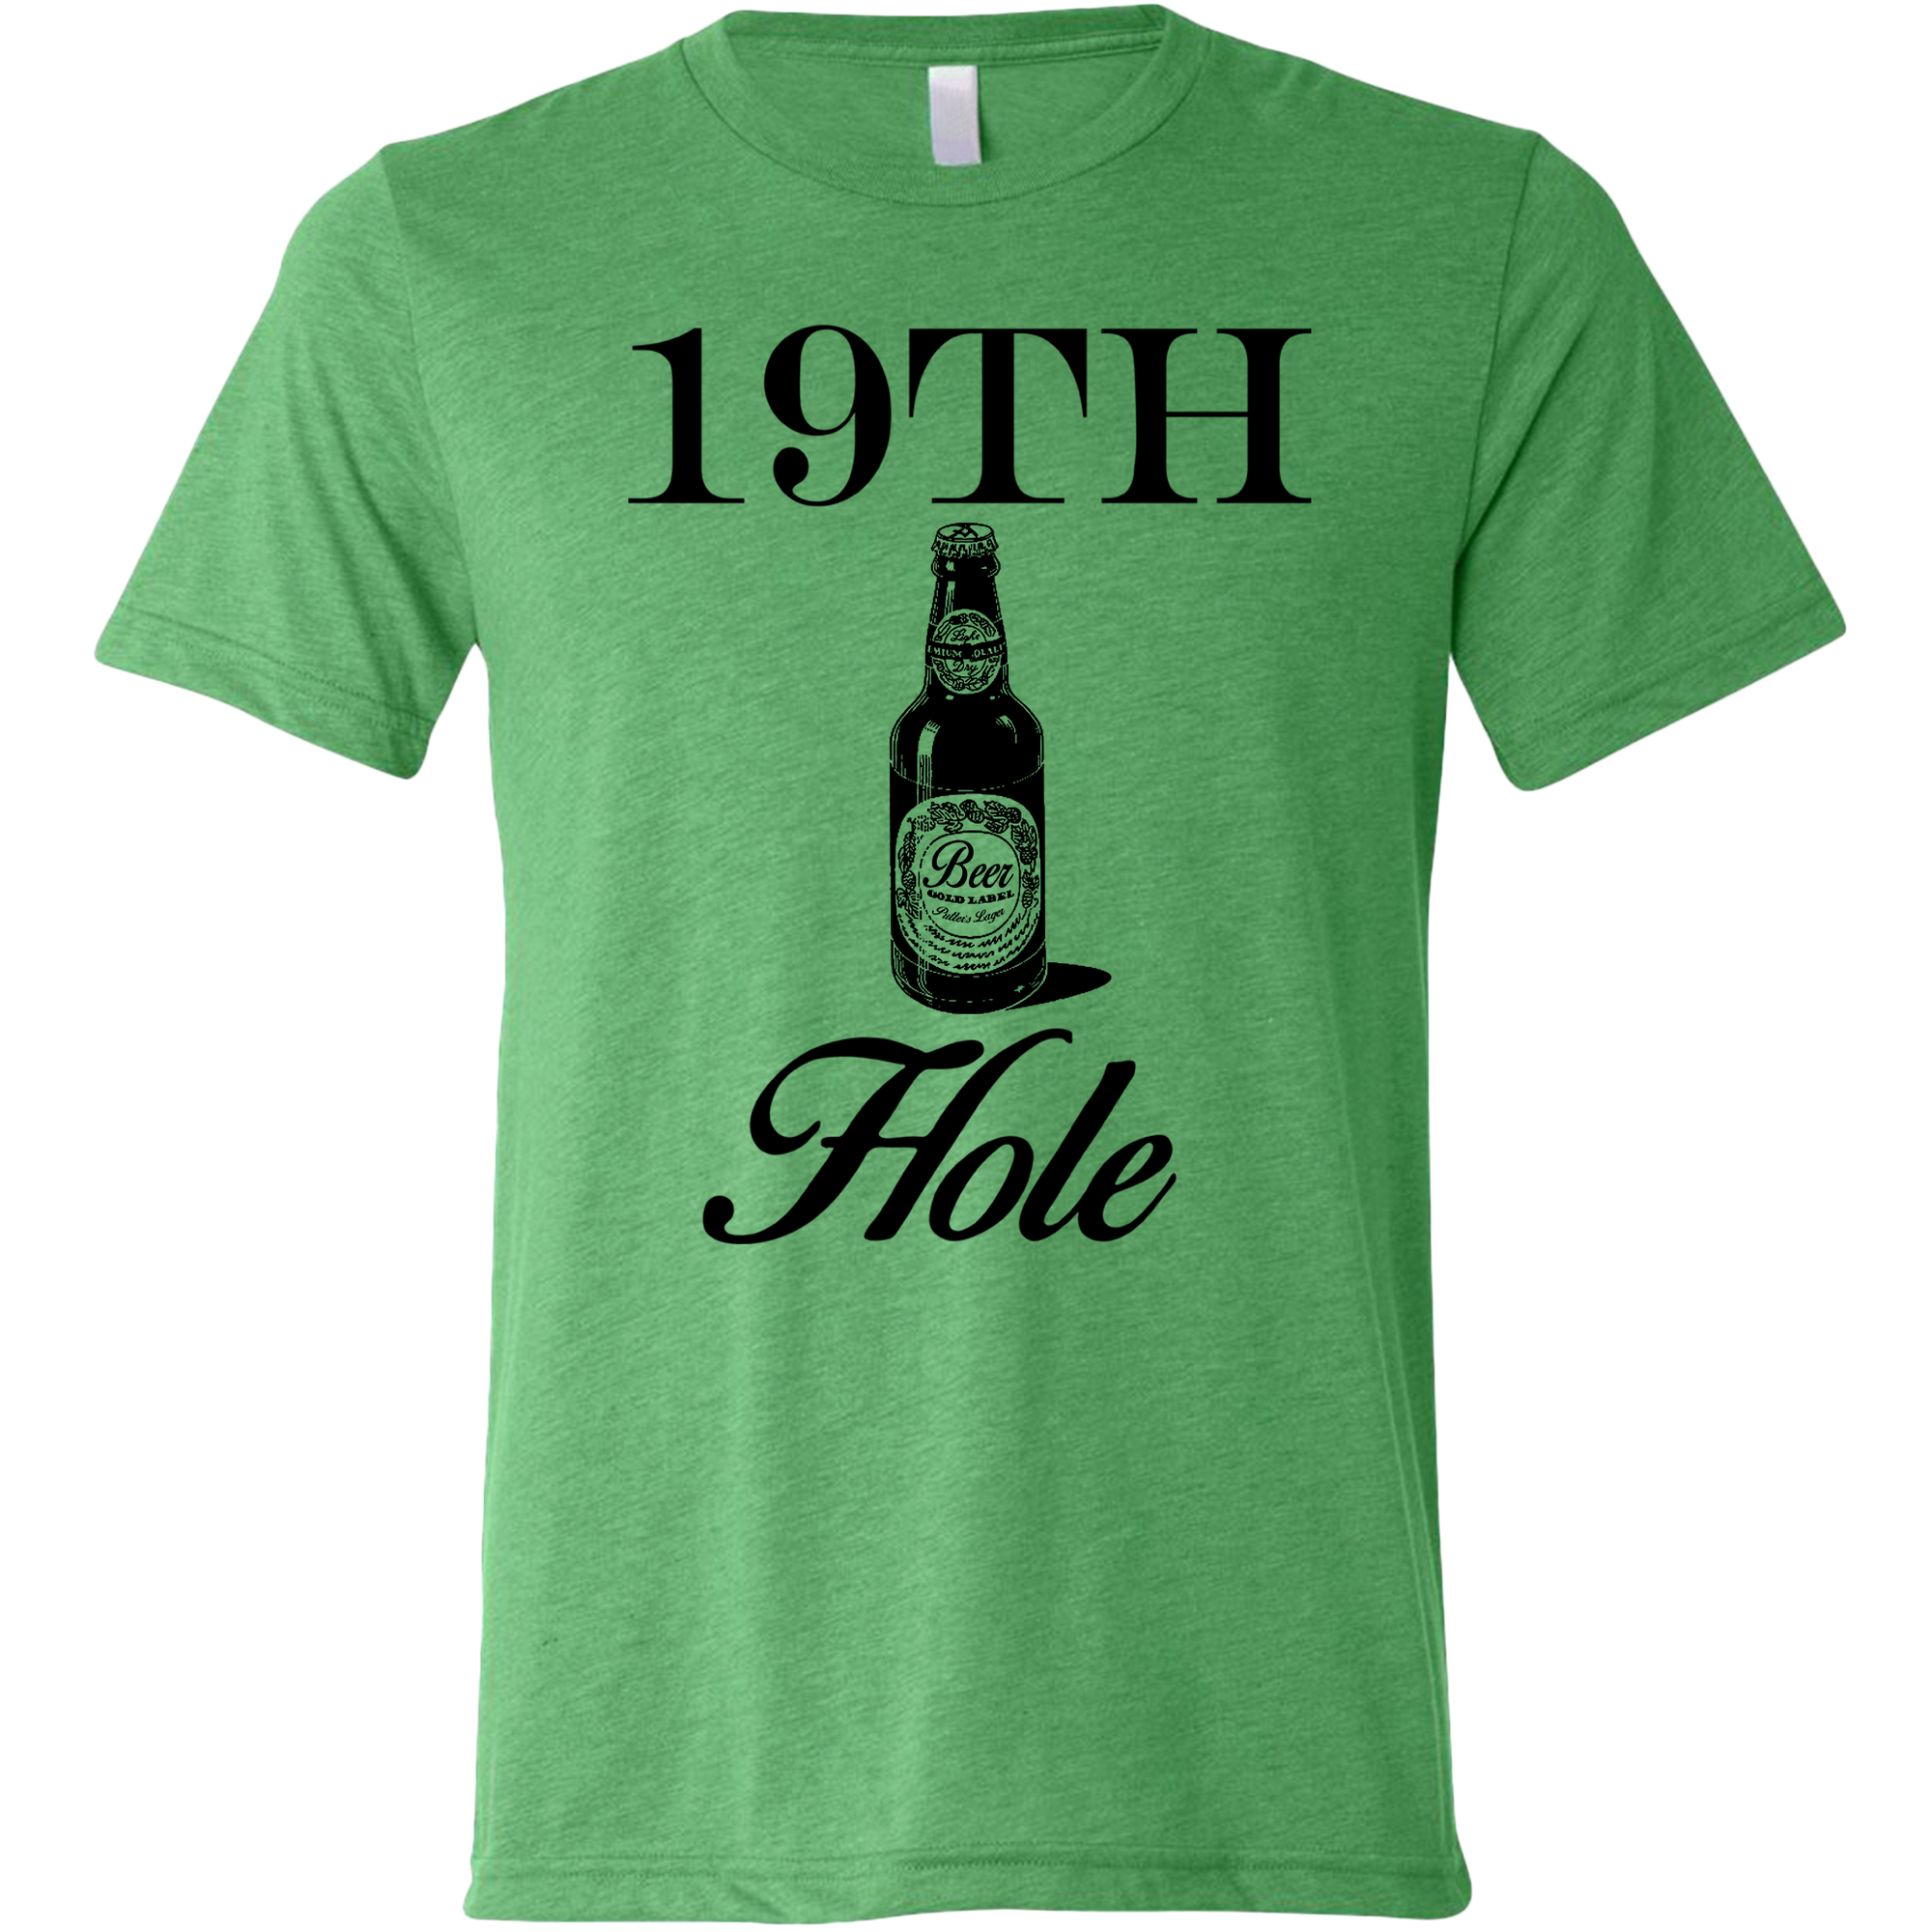 19th Hole Golf Shirt